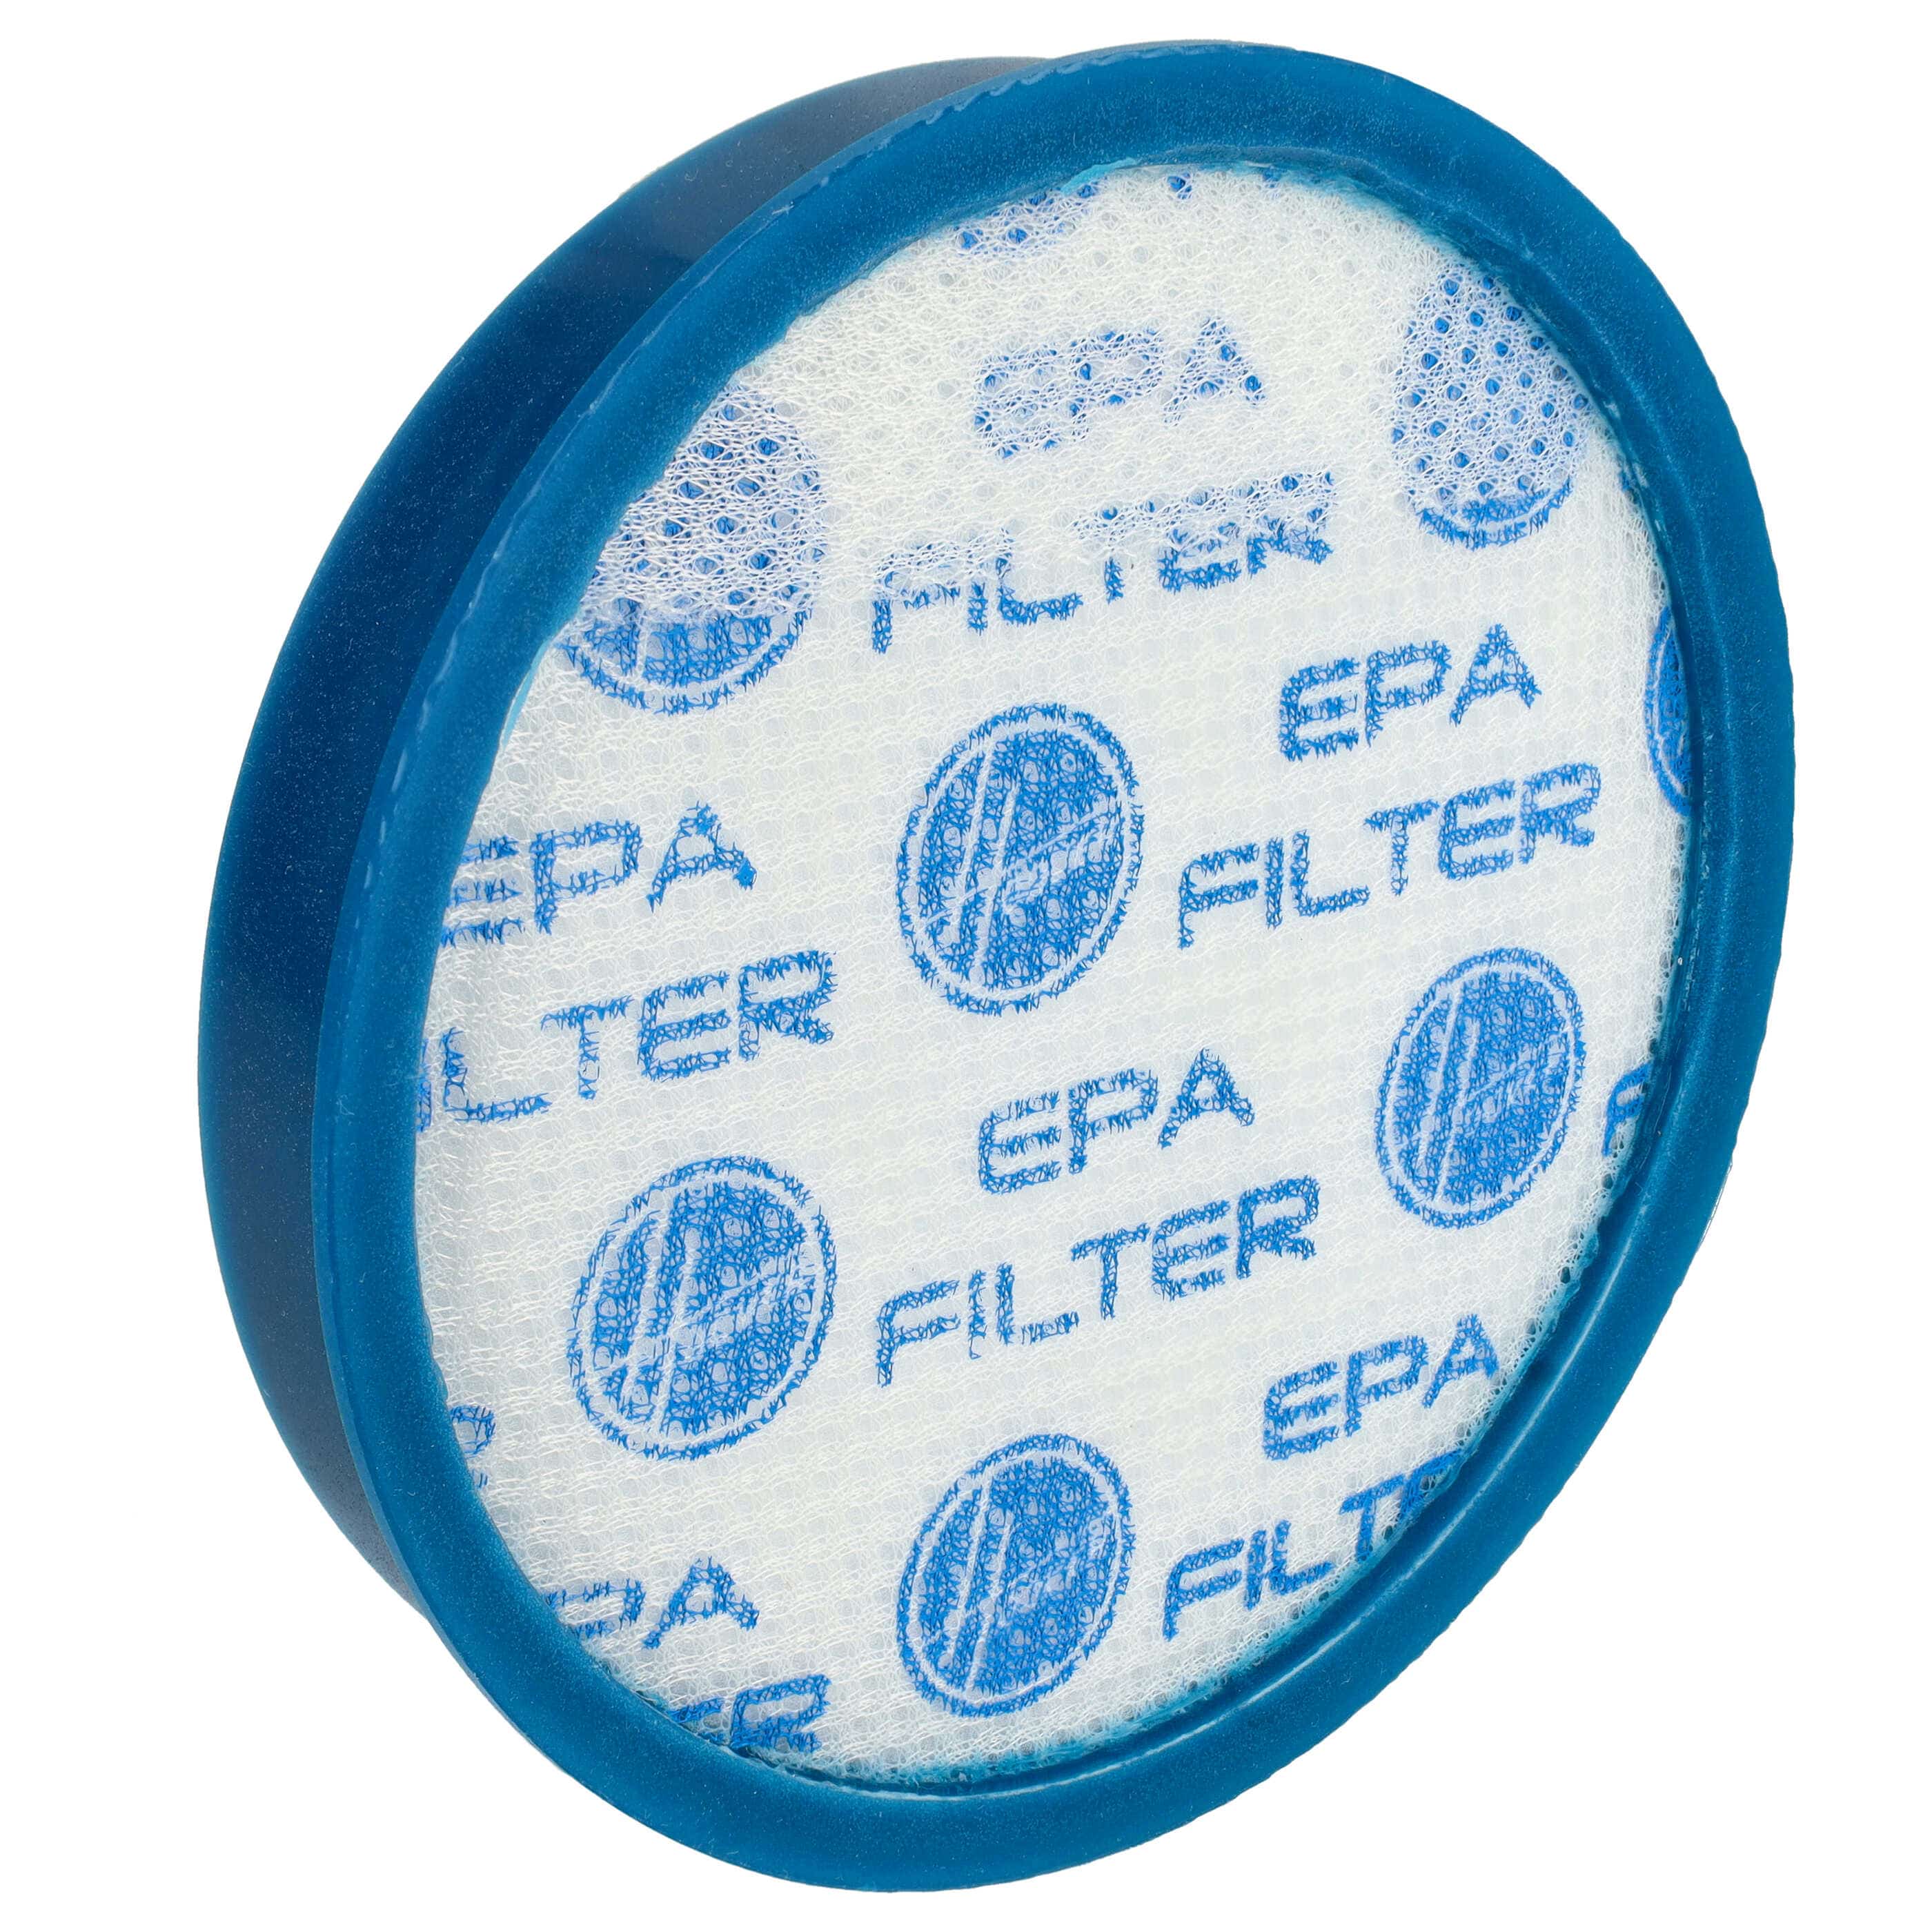 Filtr do odkurzacza Hoover zamiennik Hoover S115, 35601325 - filtr wstępny HEPA